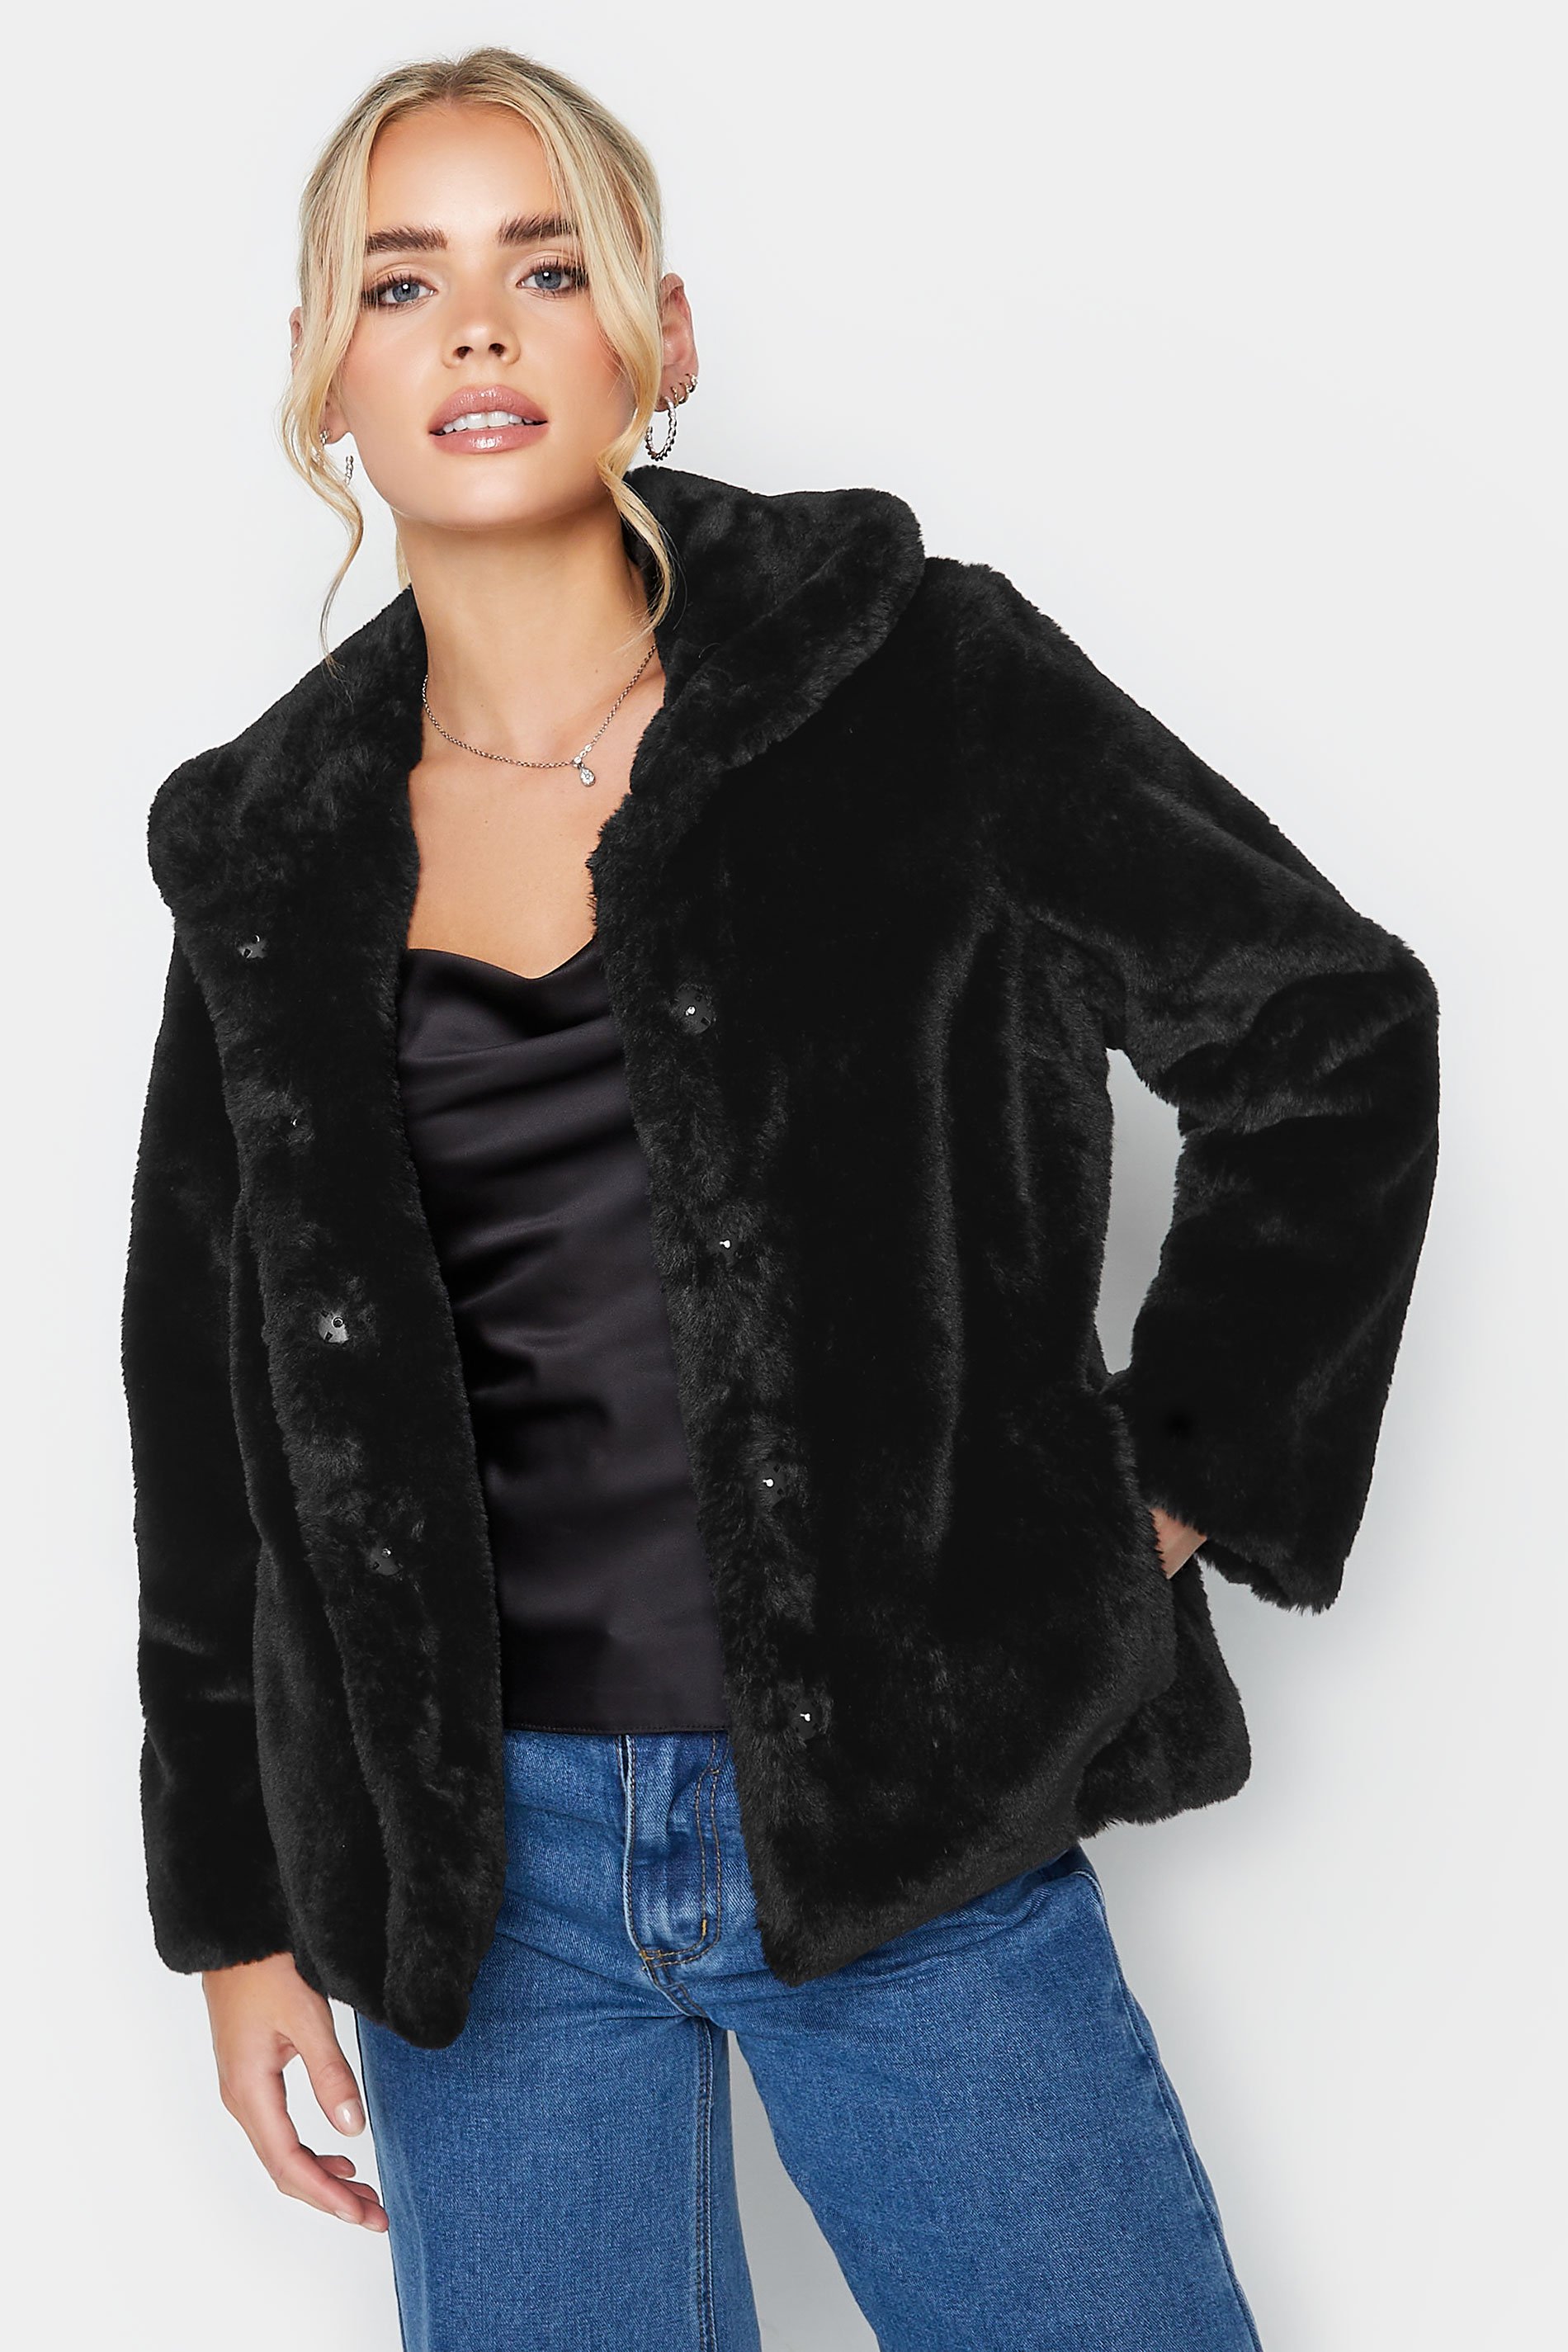 PixieGirl Black Faux Fur Coat | PixieGirl 1